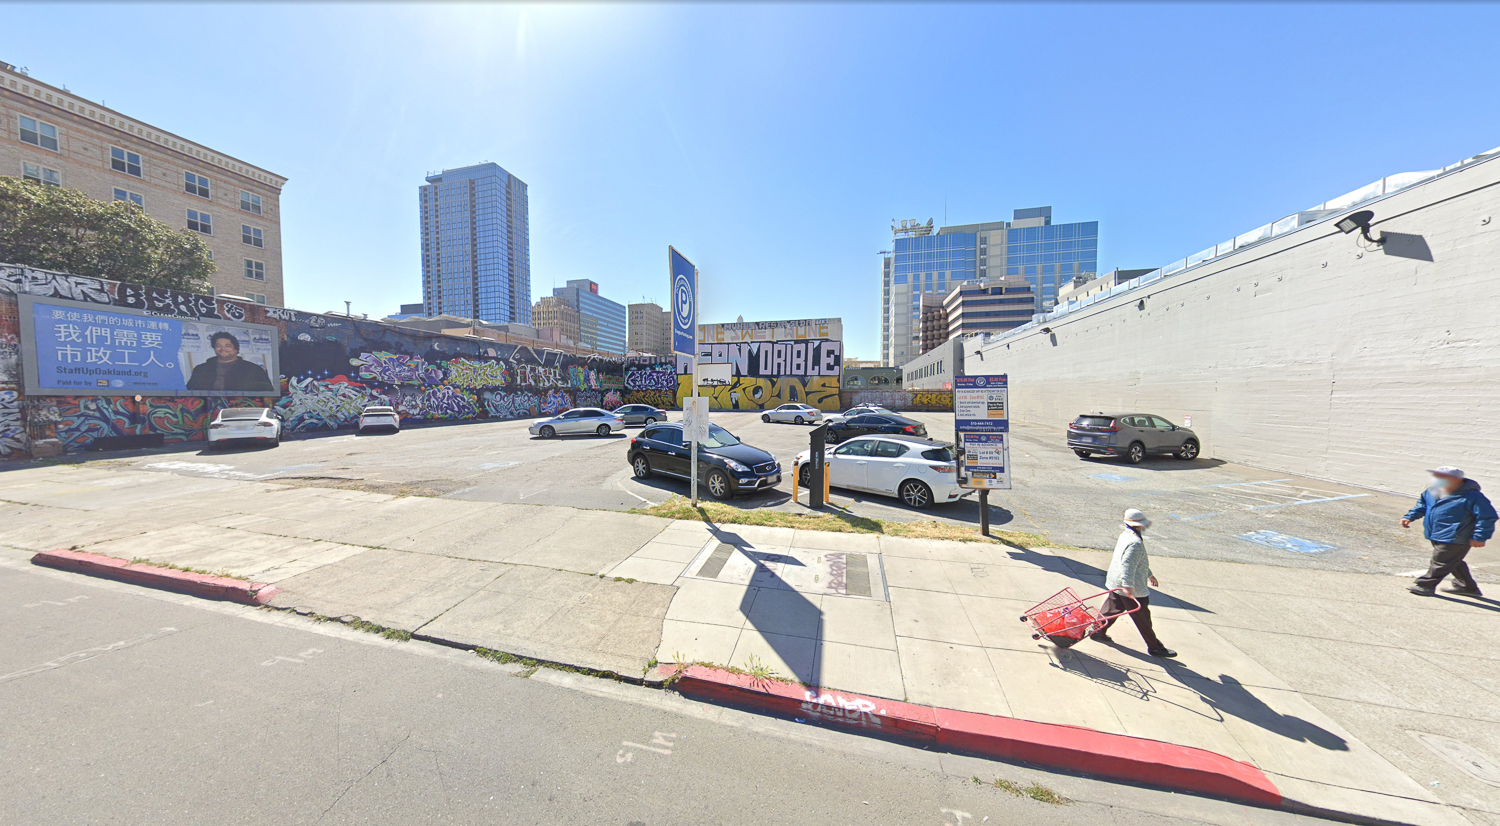 1523 Harrison Street, image via Google Street View